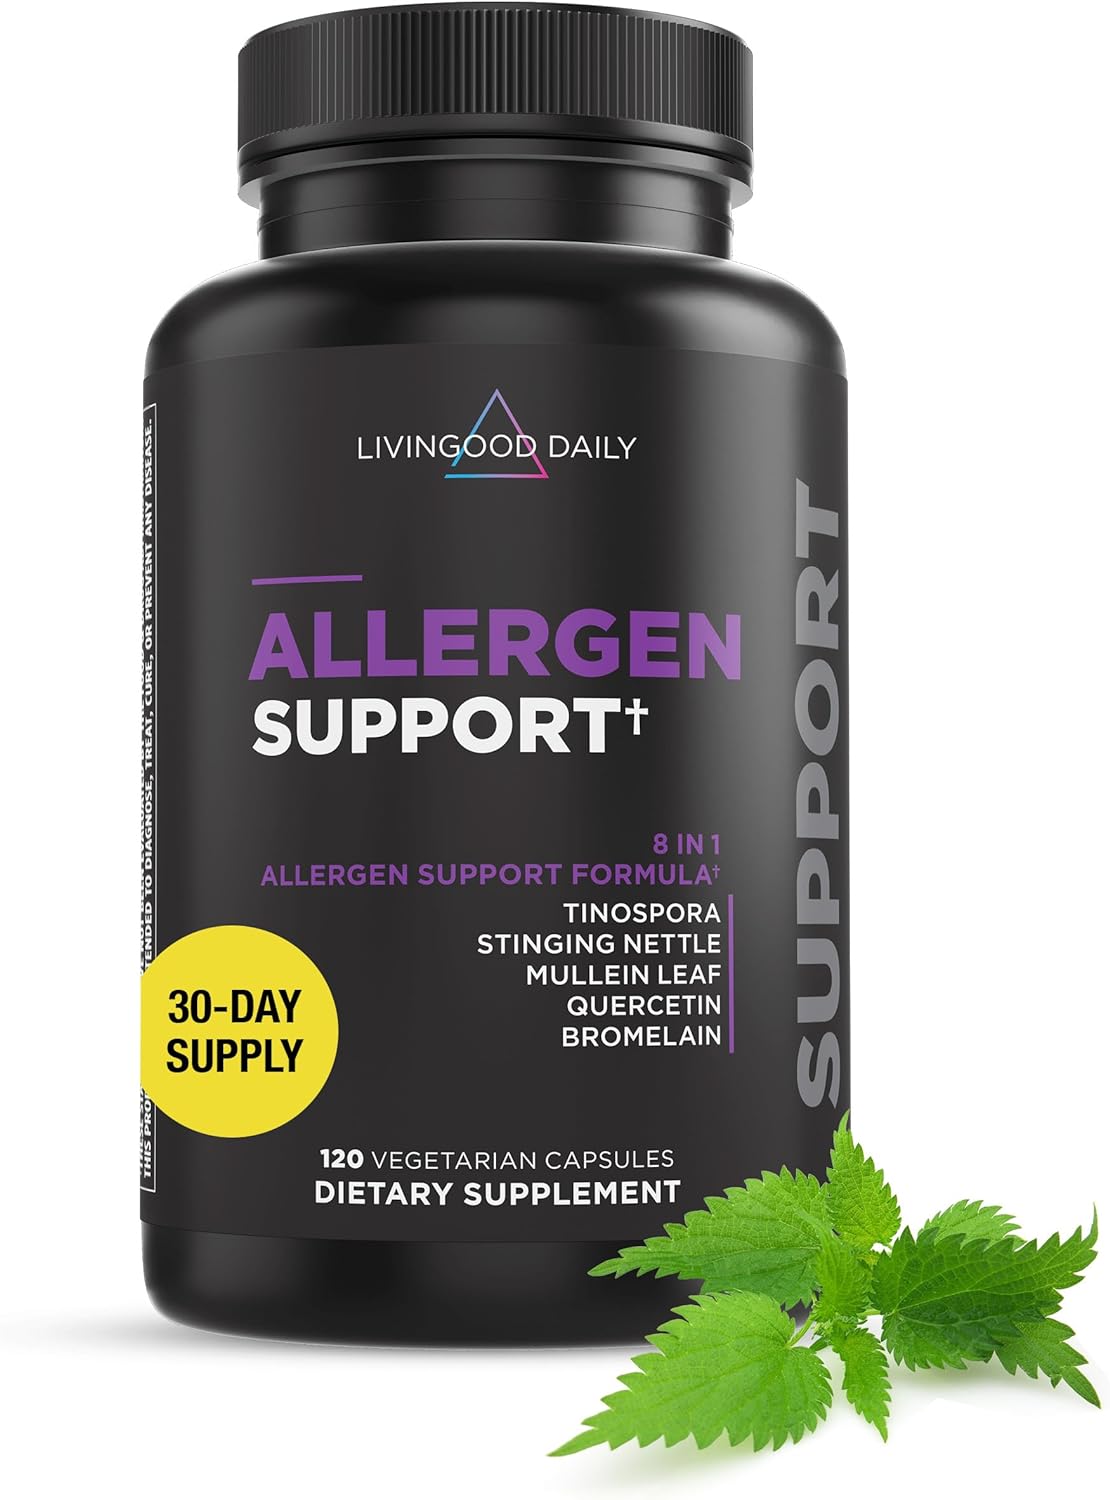 Livingood Daily Allergen Support, 120 Vegetarian Capsules - Supports Natural Allergy Relief with Vitamin C, Quercetin, Nettle Leaf, Zinc, & Tinospora - Non-GMO & Vegan Natural Antihistamine Supplement